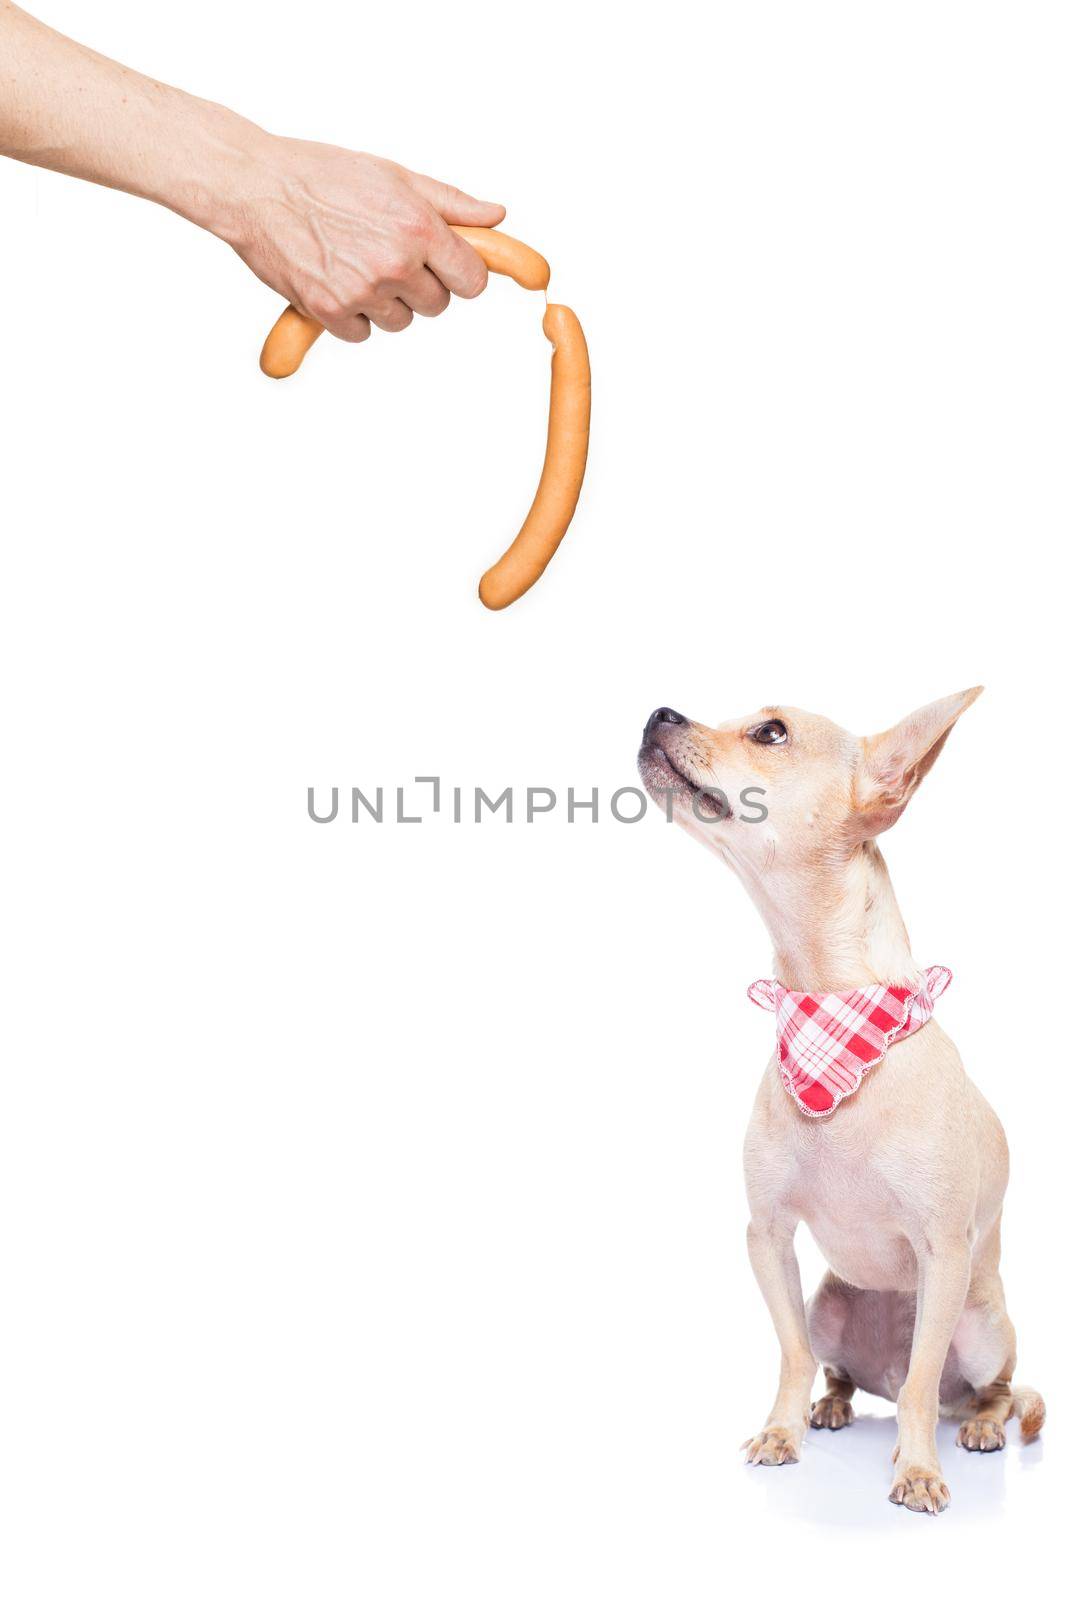 hungry dog  by Brosch